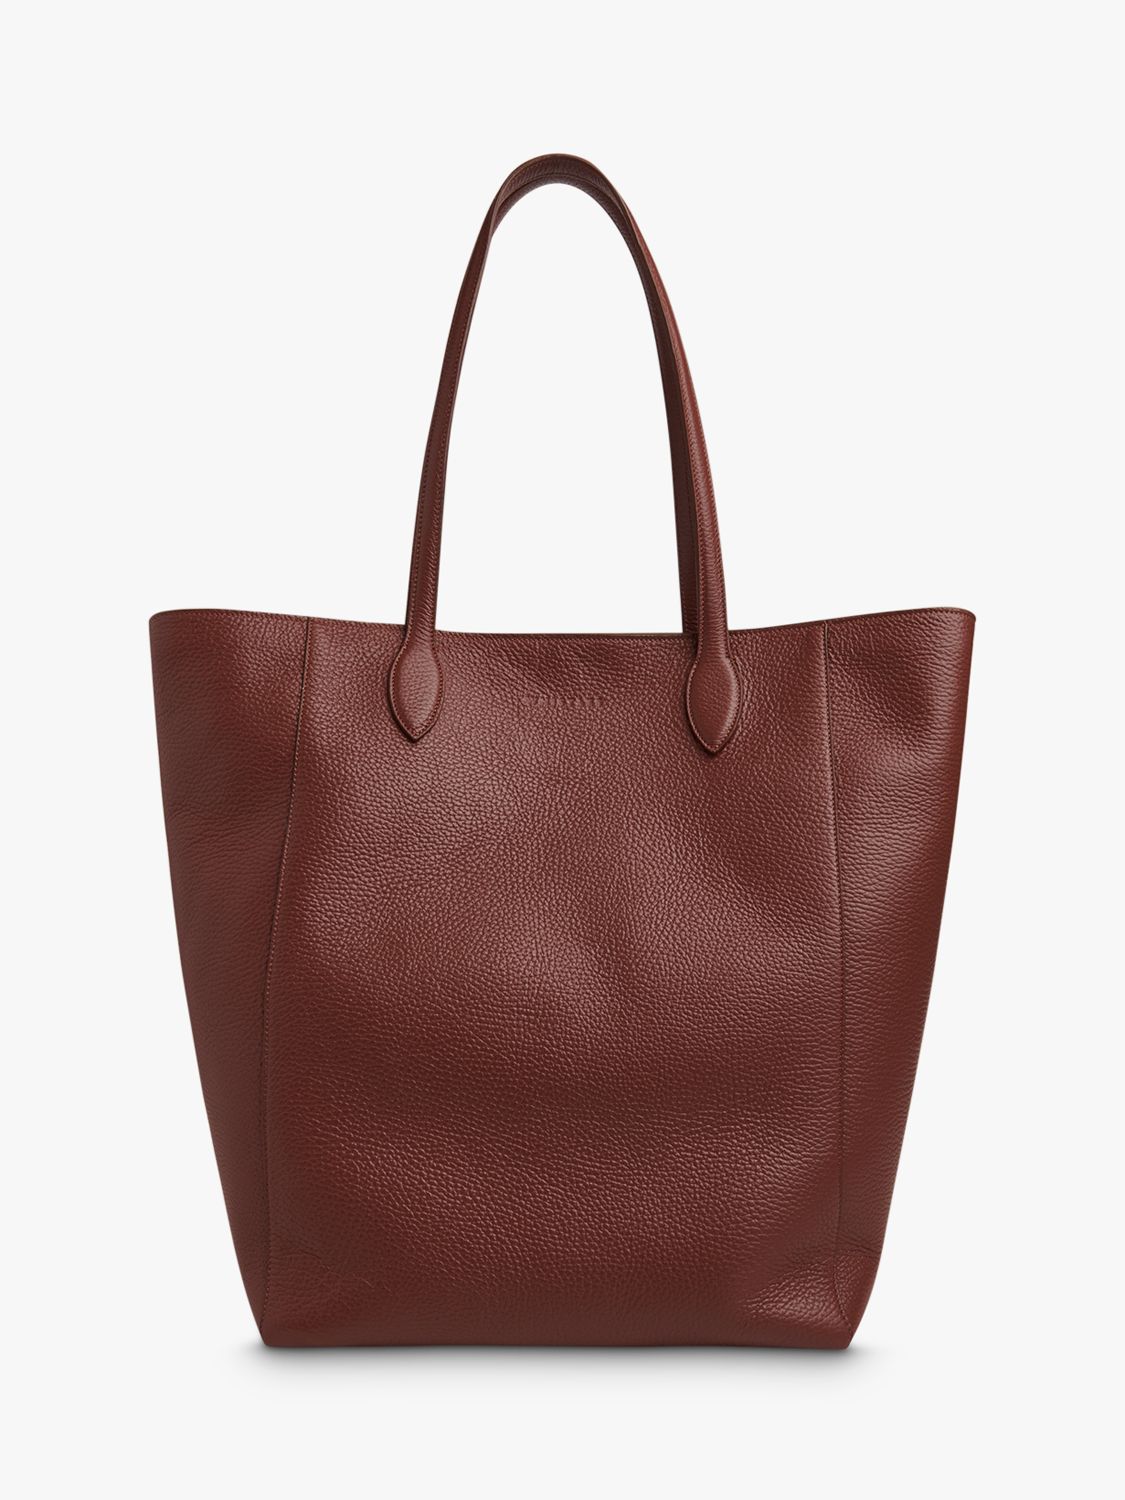 Whistles Amara Leather Tote Bag, Tan, One Size